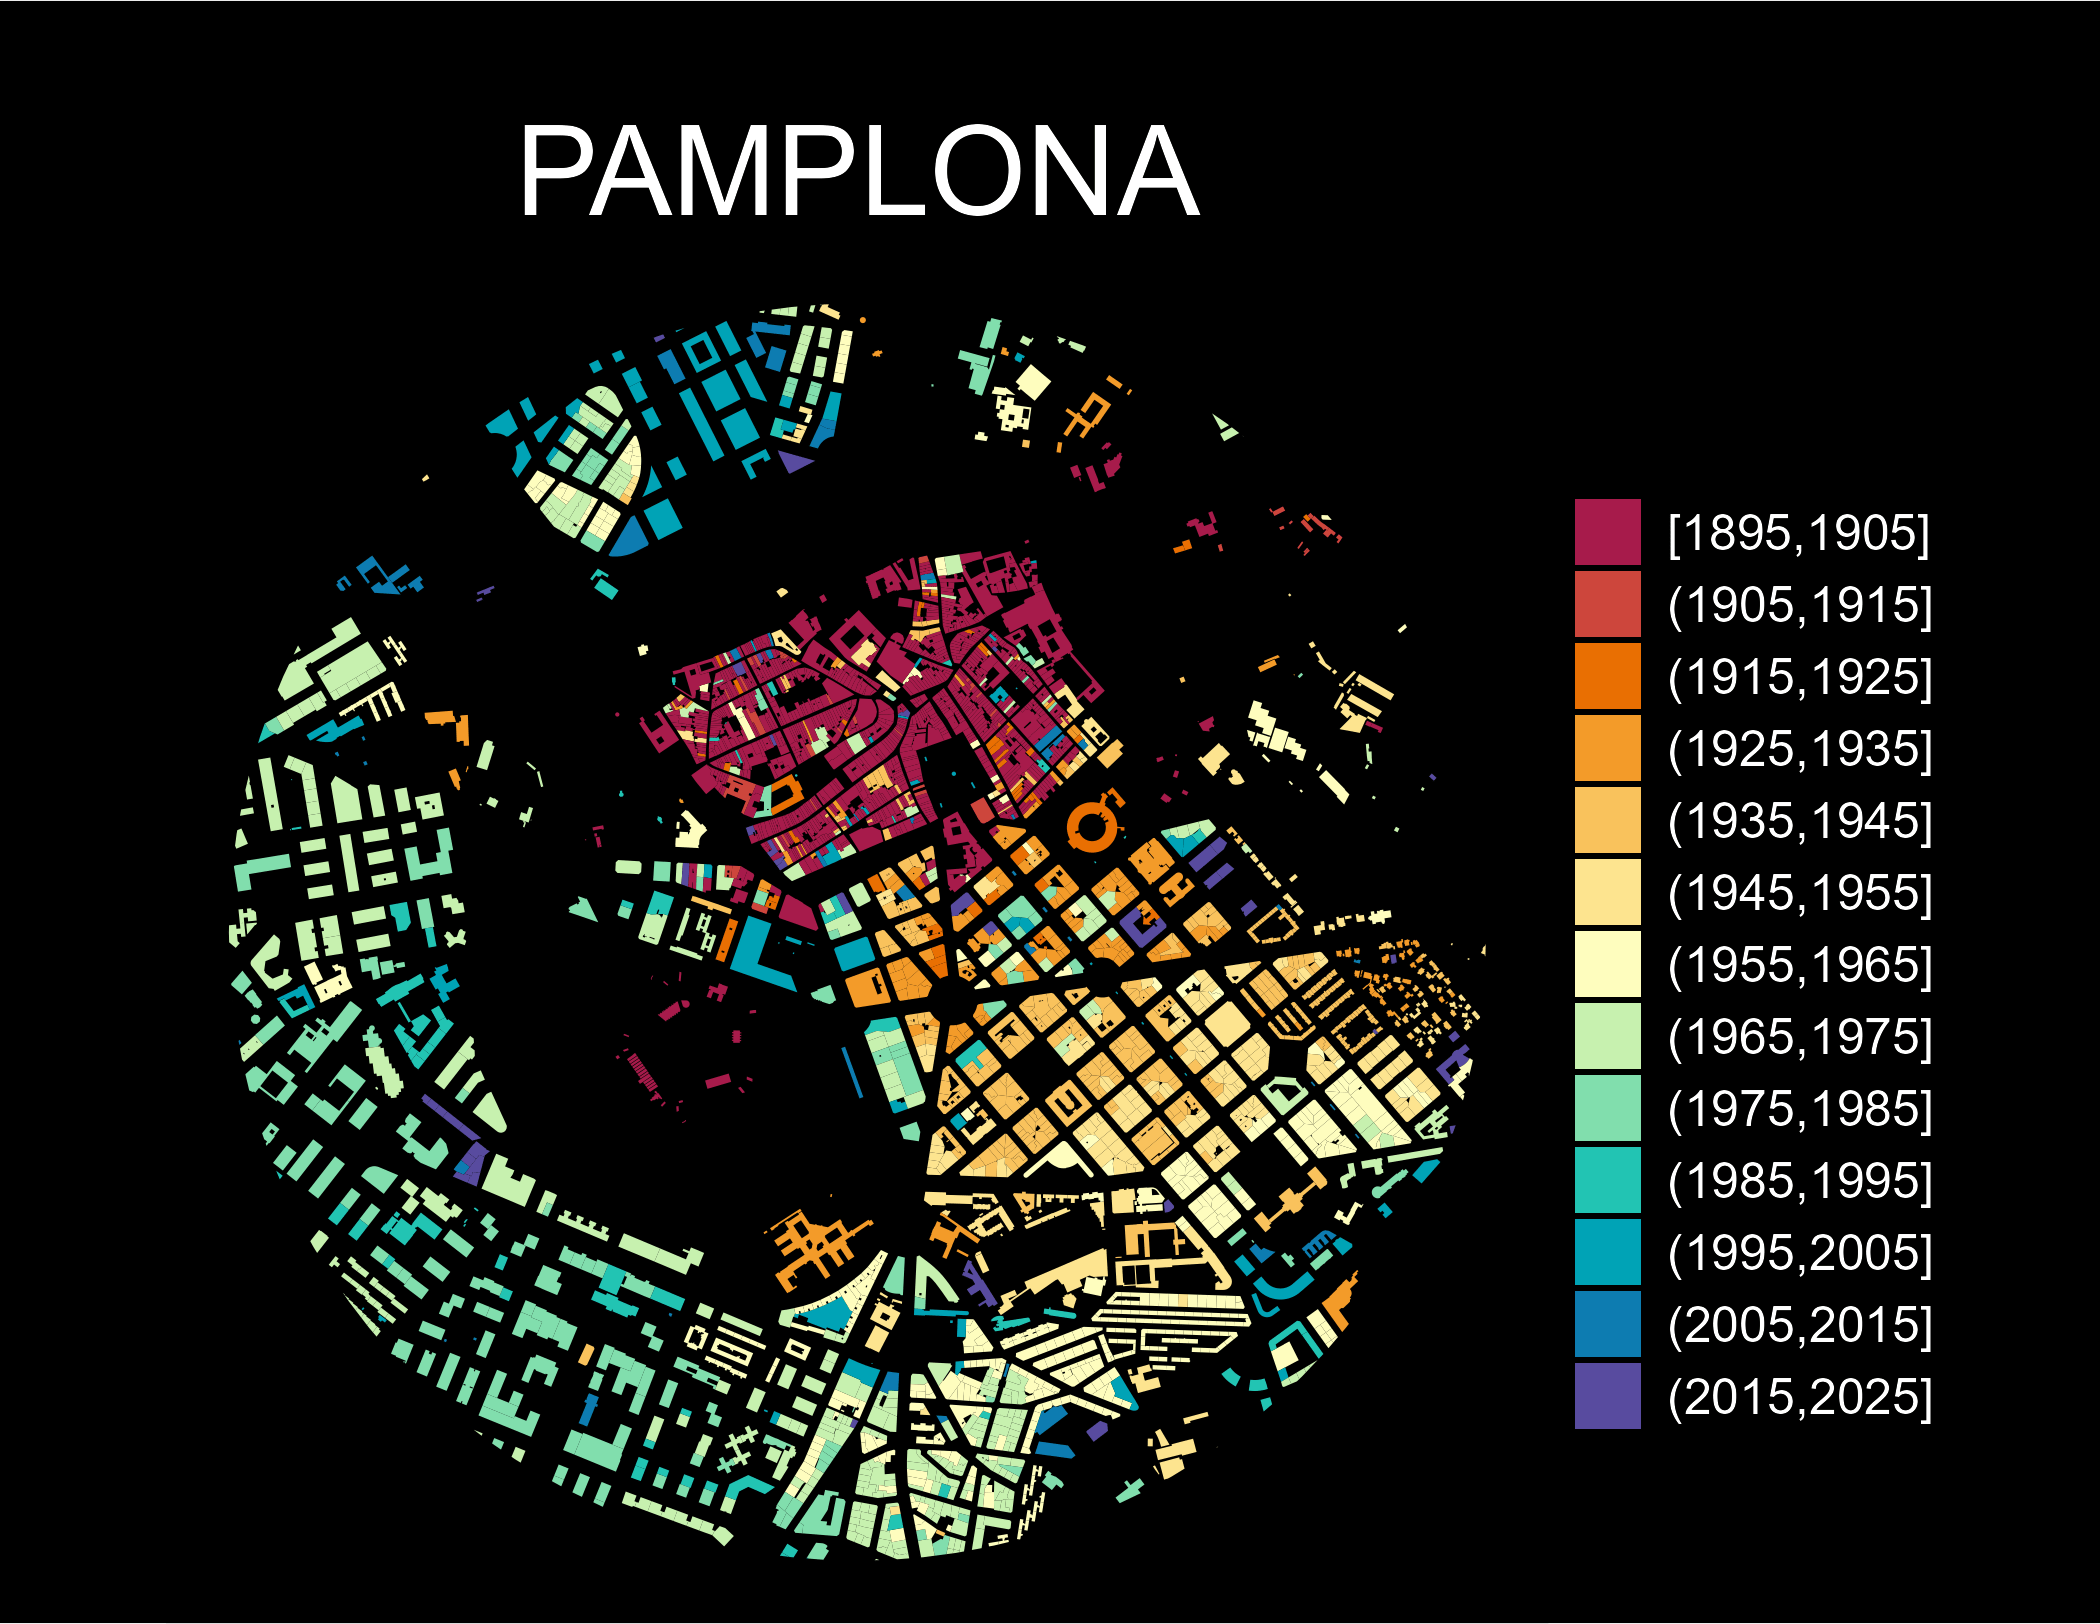 Pamplona: Urban Growth